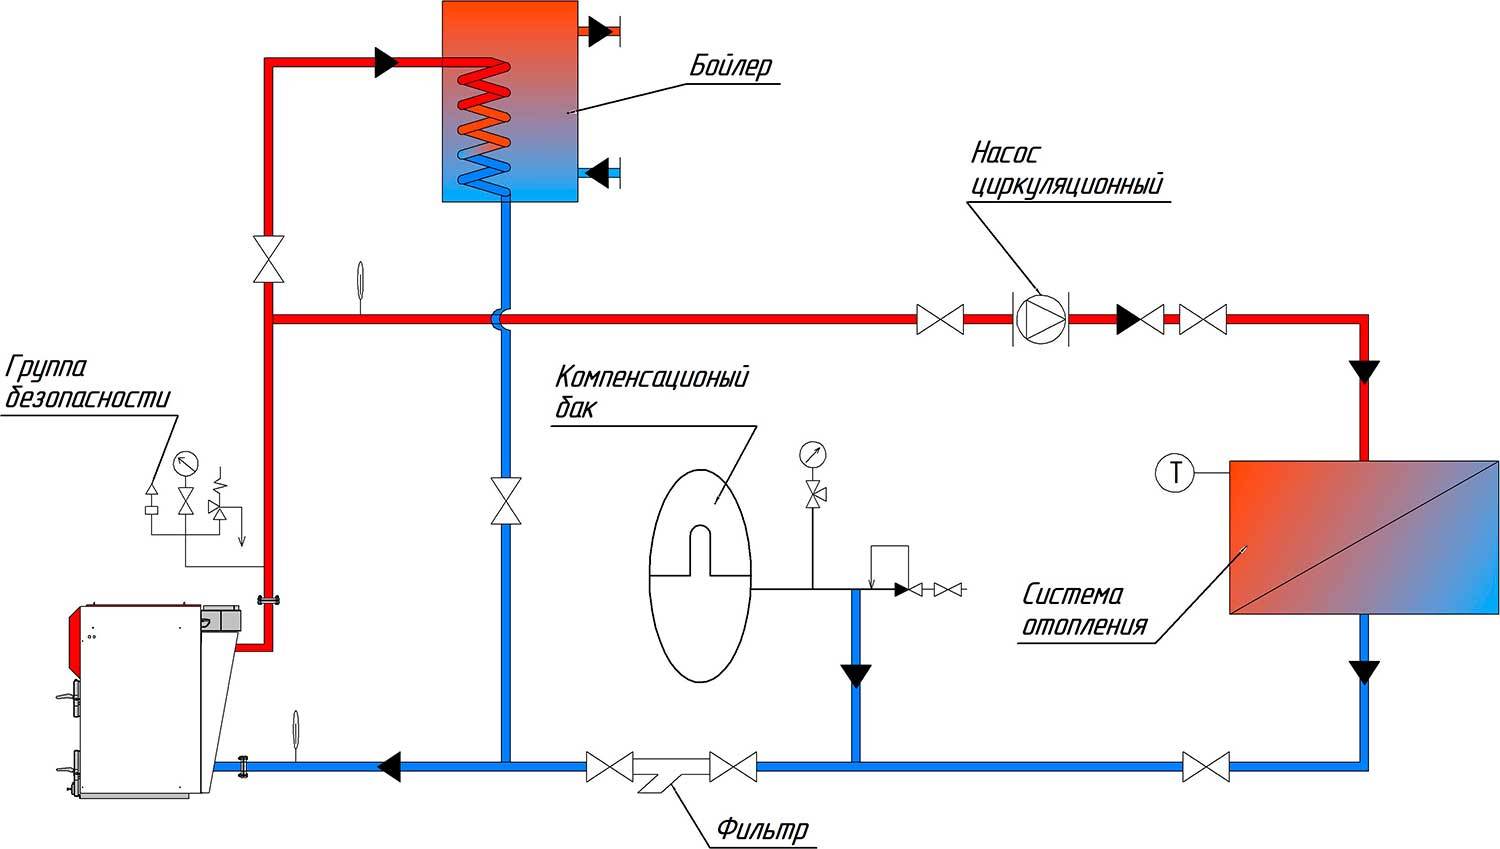 Онлайн калькулятор подбор циркуляционного насоса отопления. подбор циркуляционного насоса для системы отопления дома